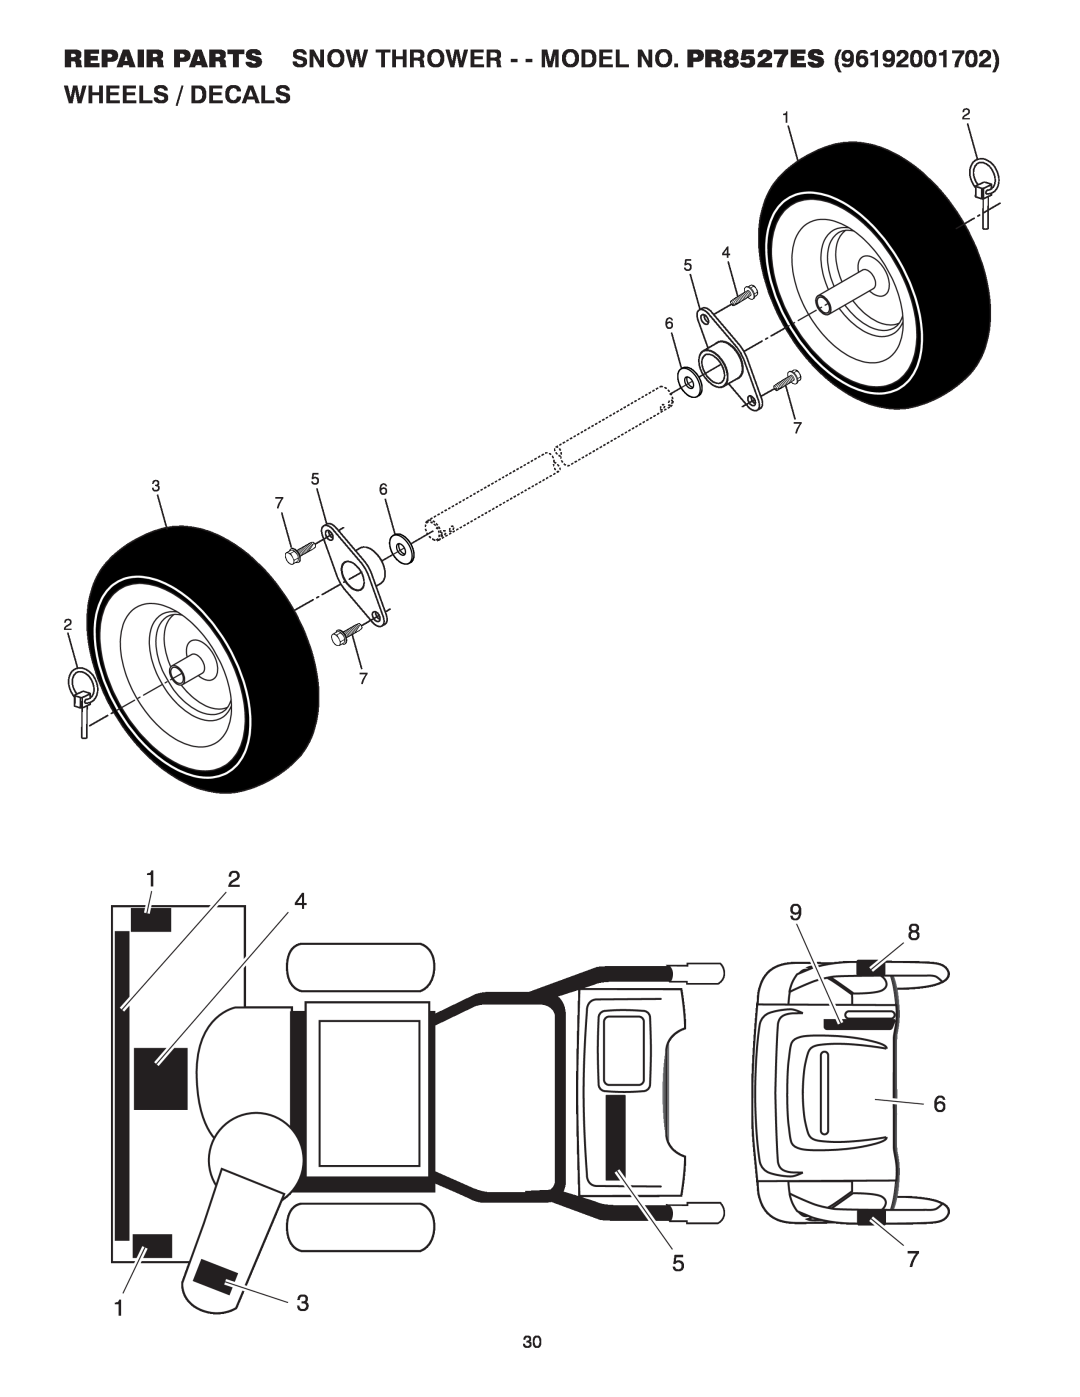 Poulan 416810 owner manual Wheels / Decals, REPAIR PARTS SNOW THROWER - - MODEL NO. PR8527ES, 8 6 